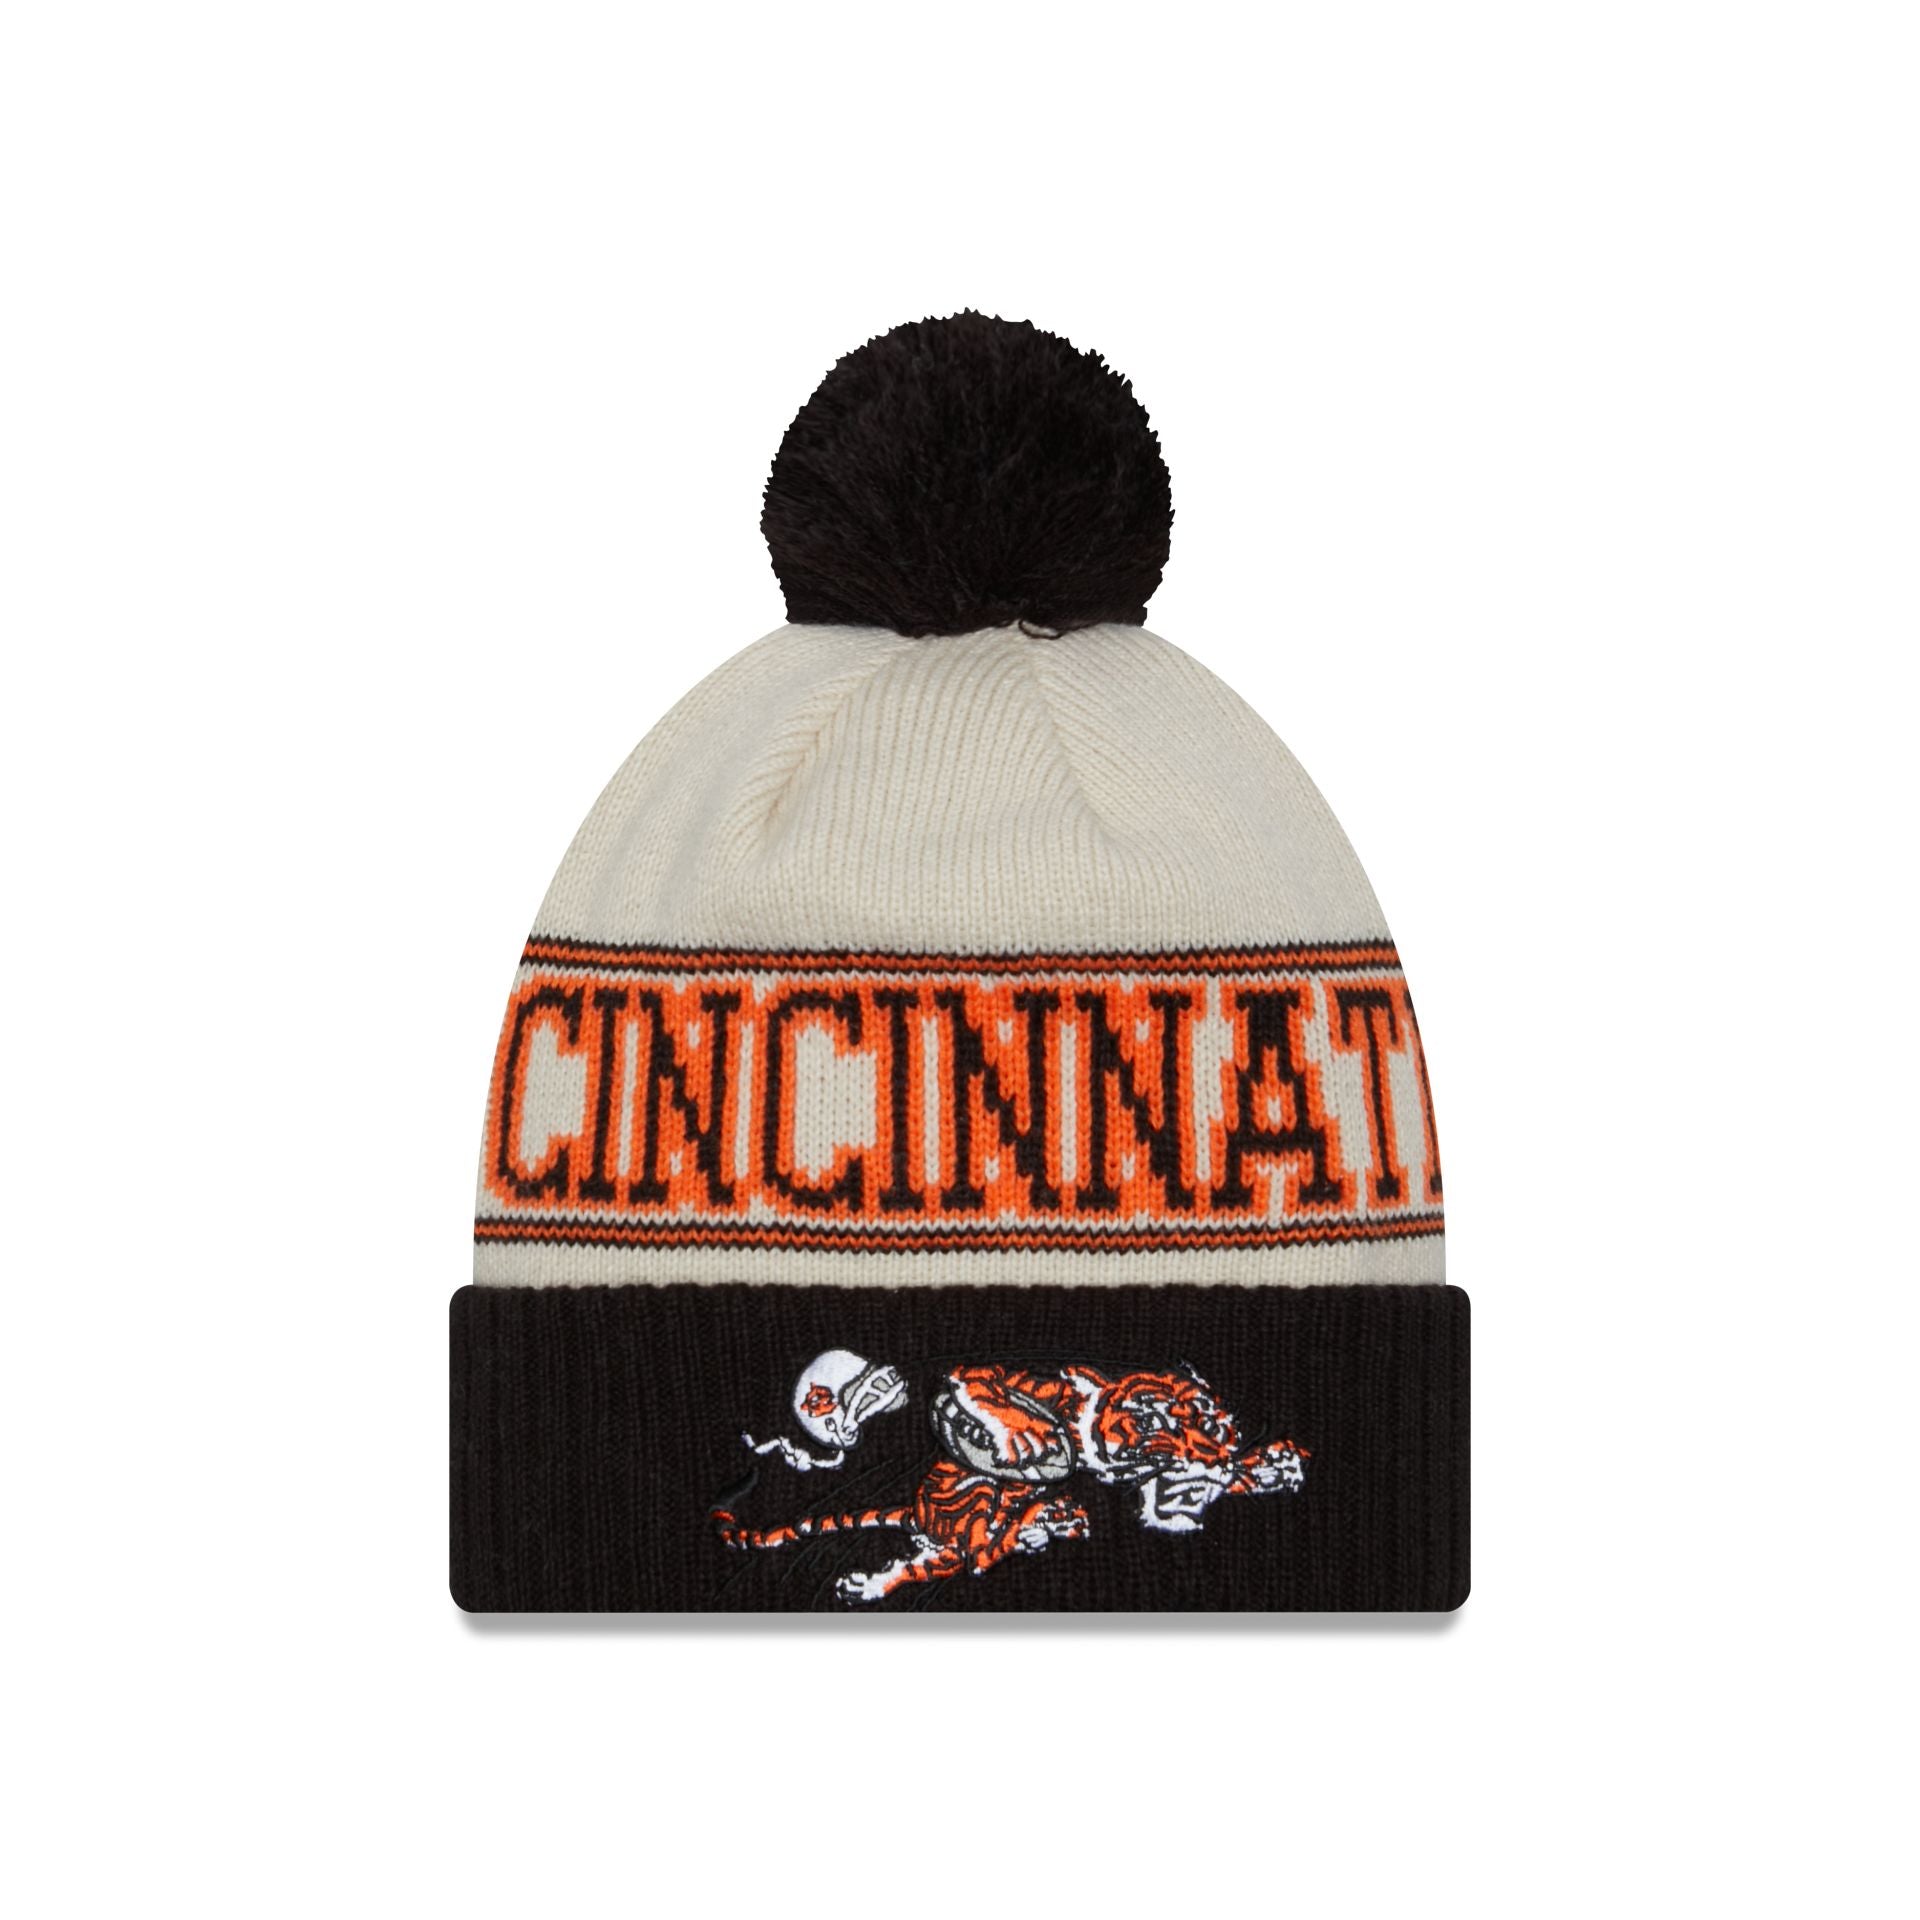 Cincinnati Bengals Knit Hats, Beanies, Bengals Pom Pom Knit Hat